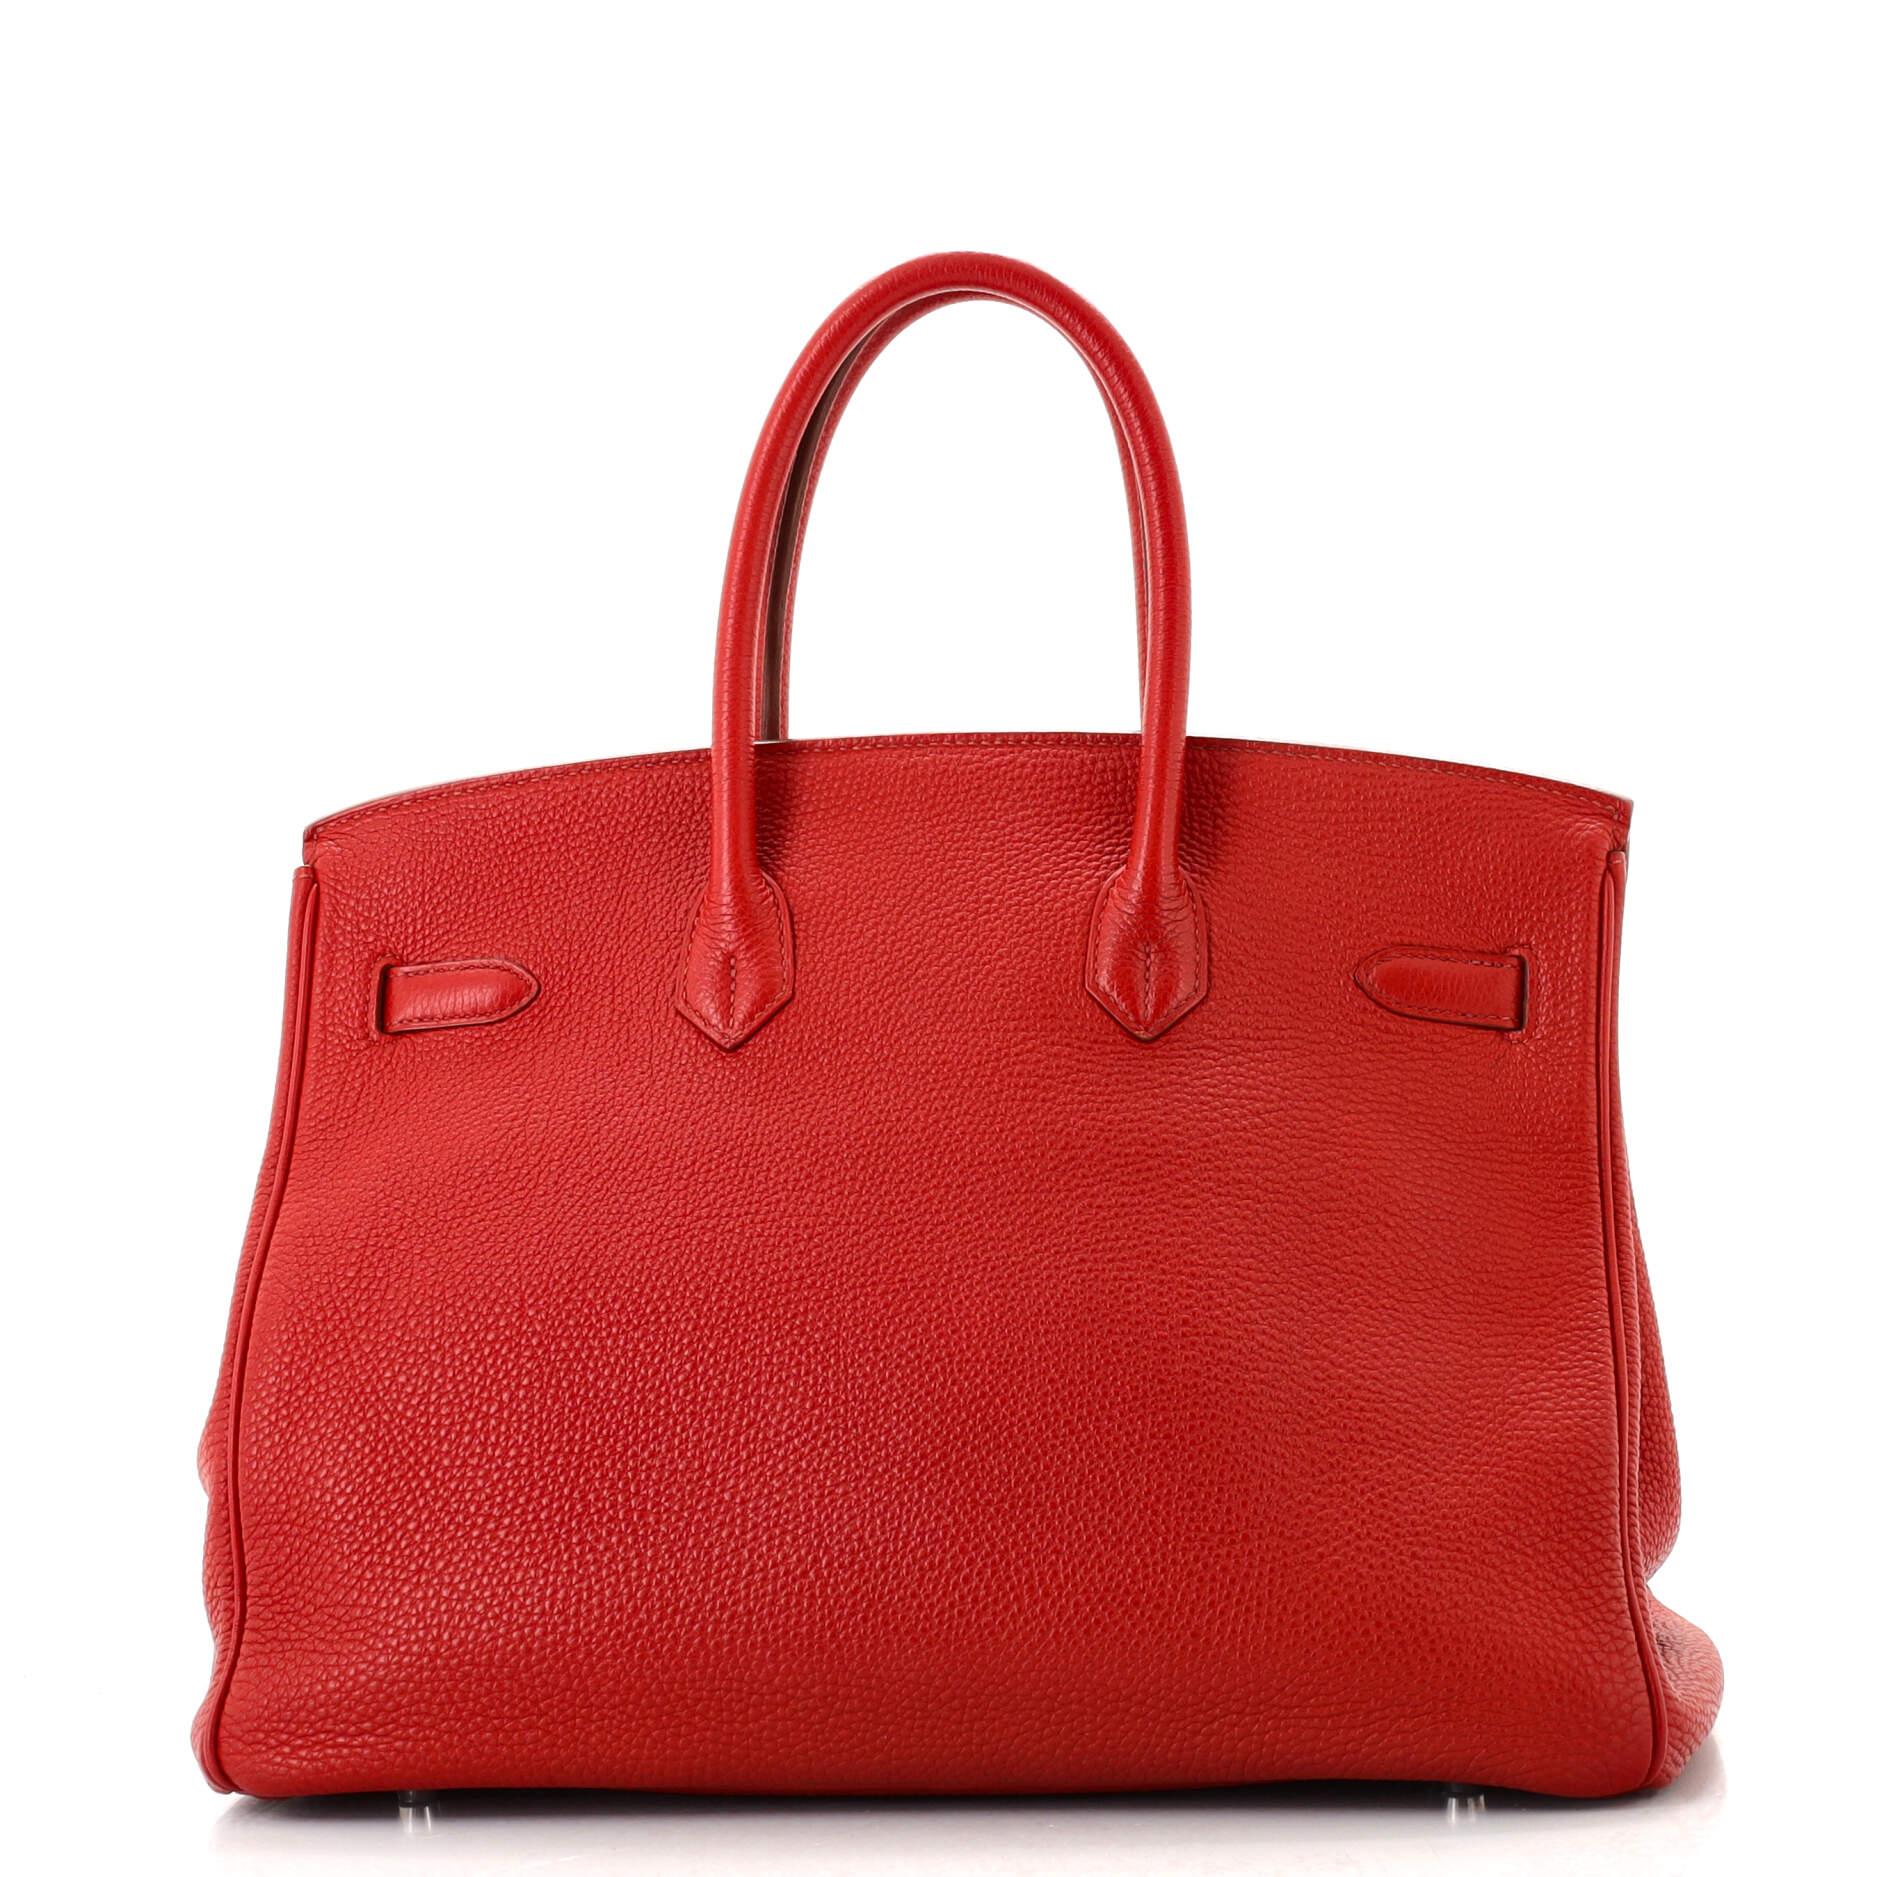 Red Hermes Birkin Handbag Rouge Garance Togo with Palladium Hardware 35